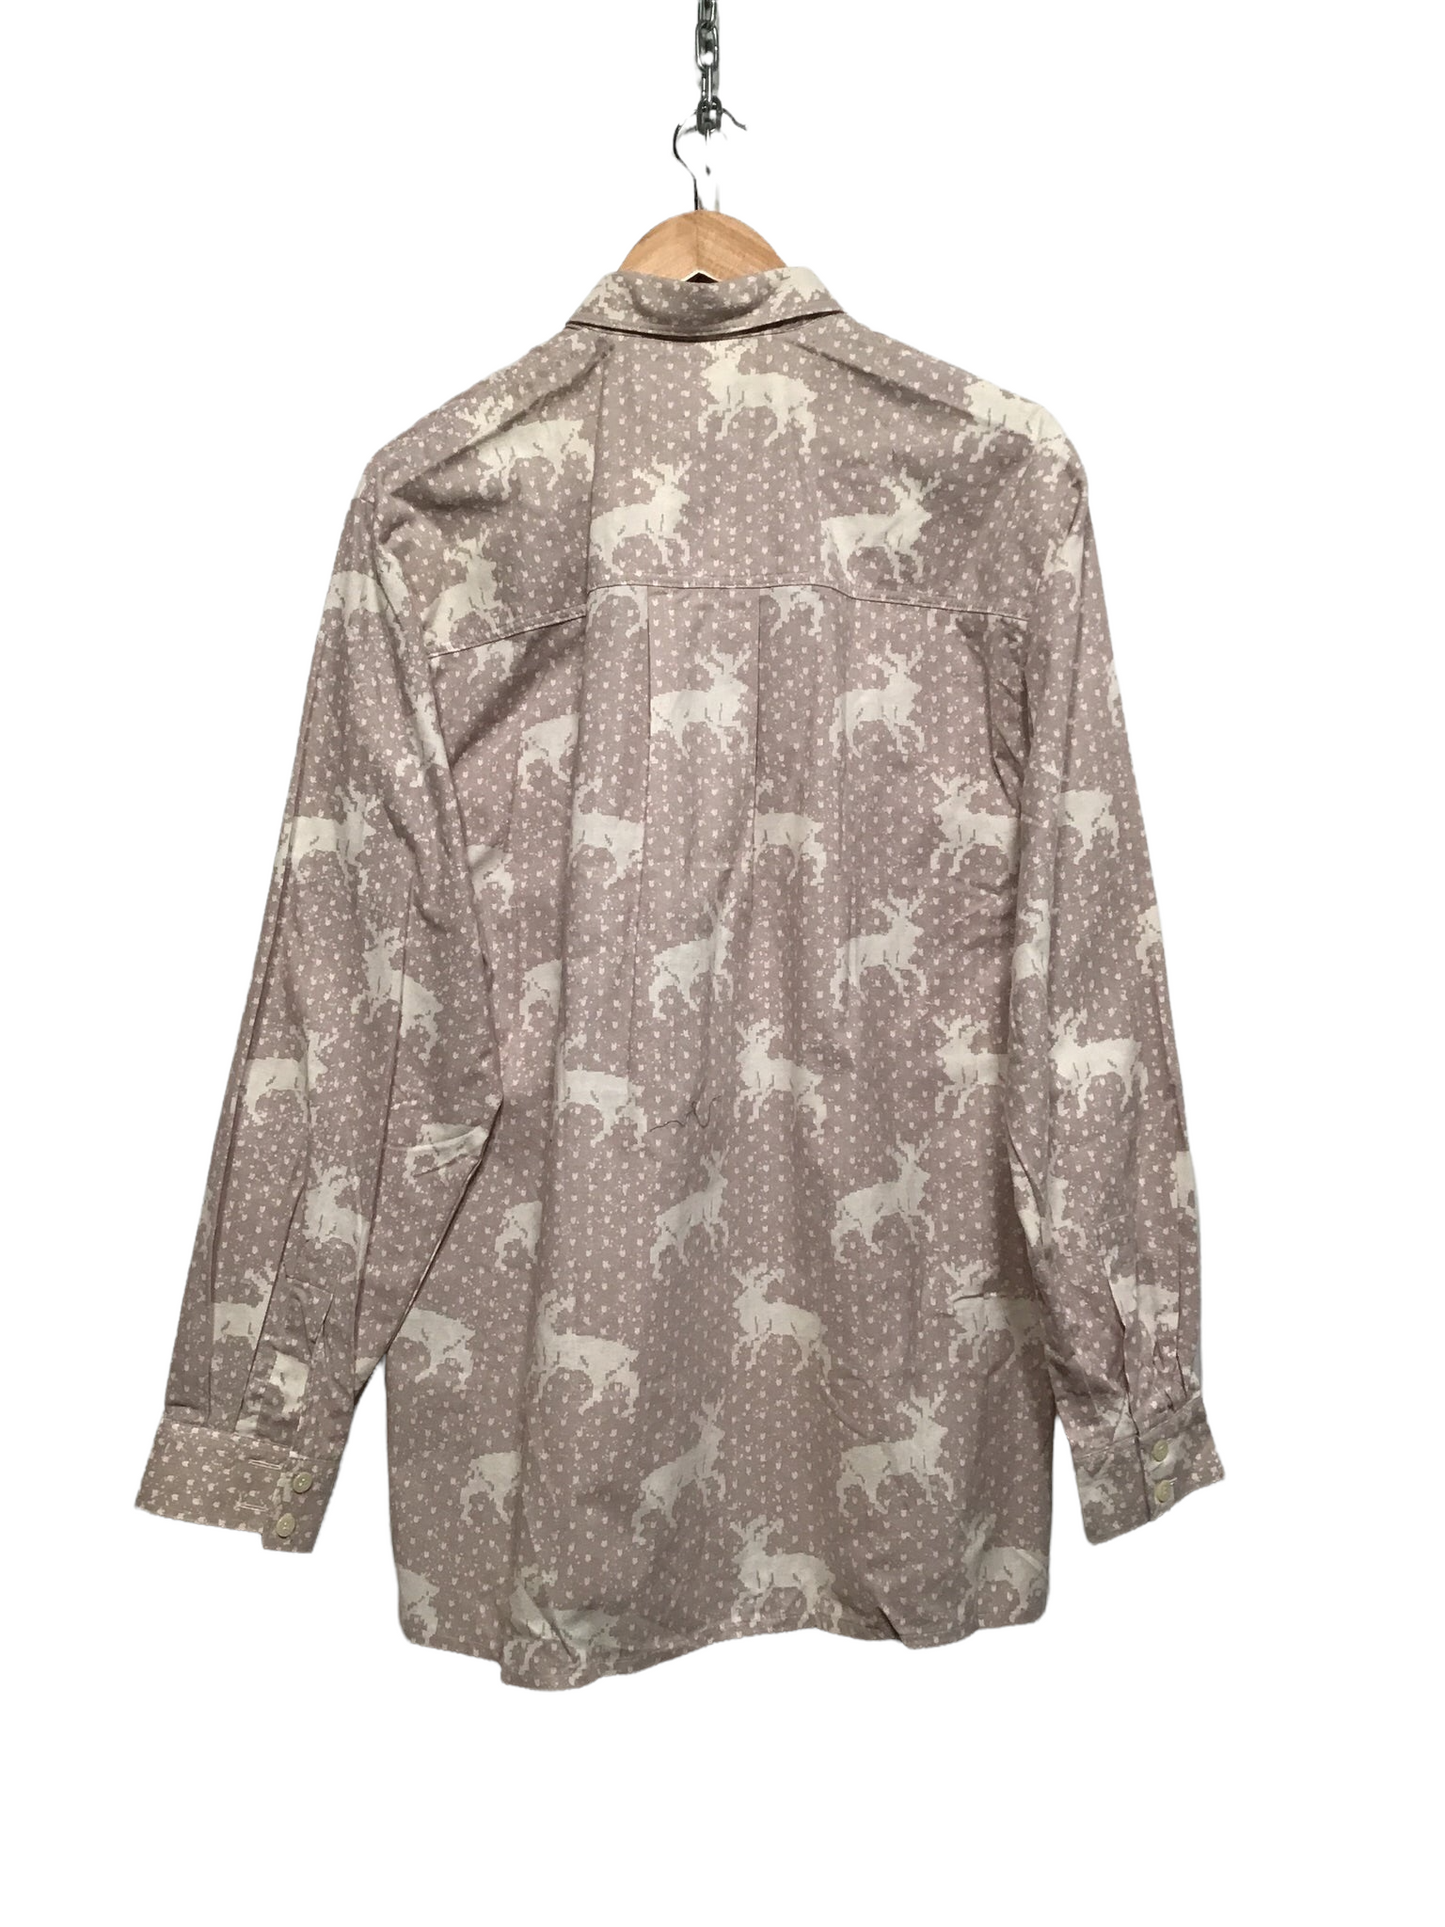 Deer Pattern 70’s Shirt (Size M)